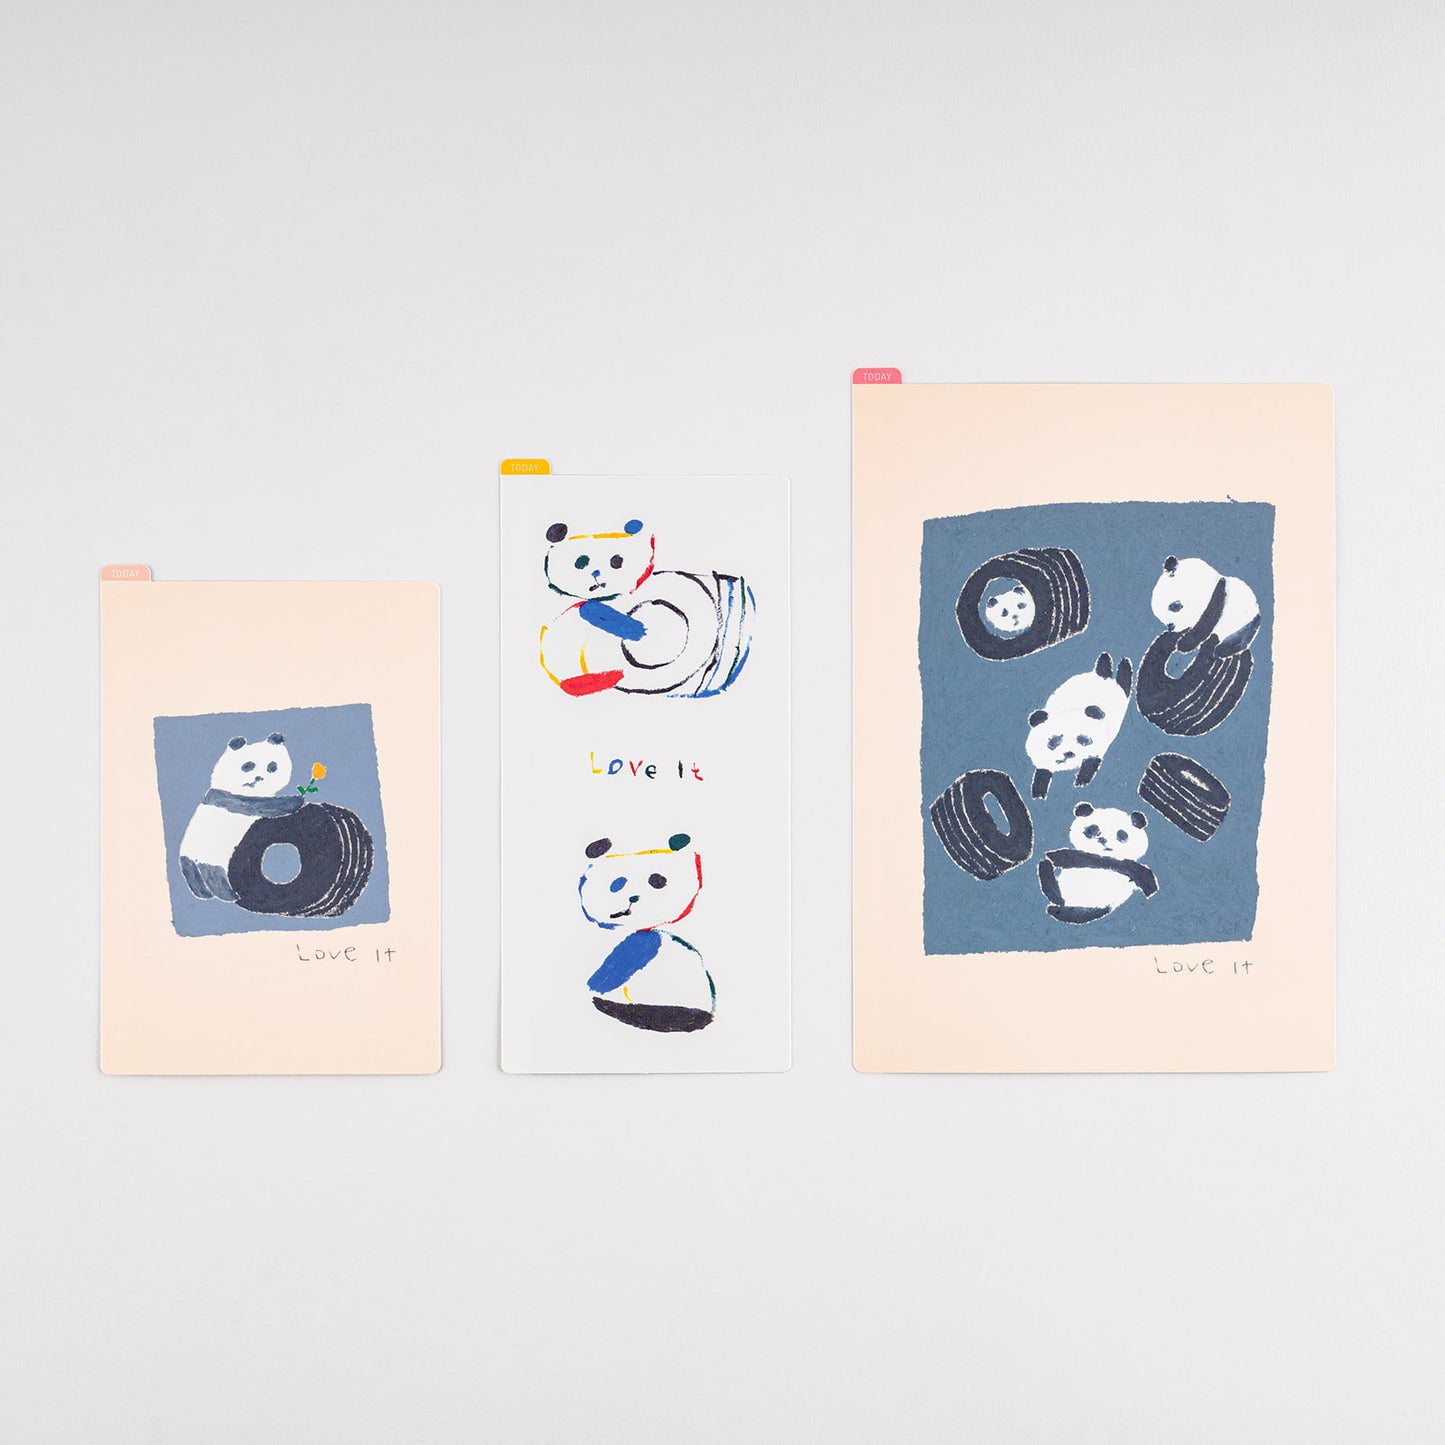 Jin Kitamura: Love it (Panda) / Hobonichi Pencil Board